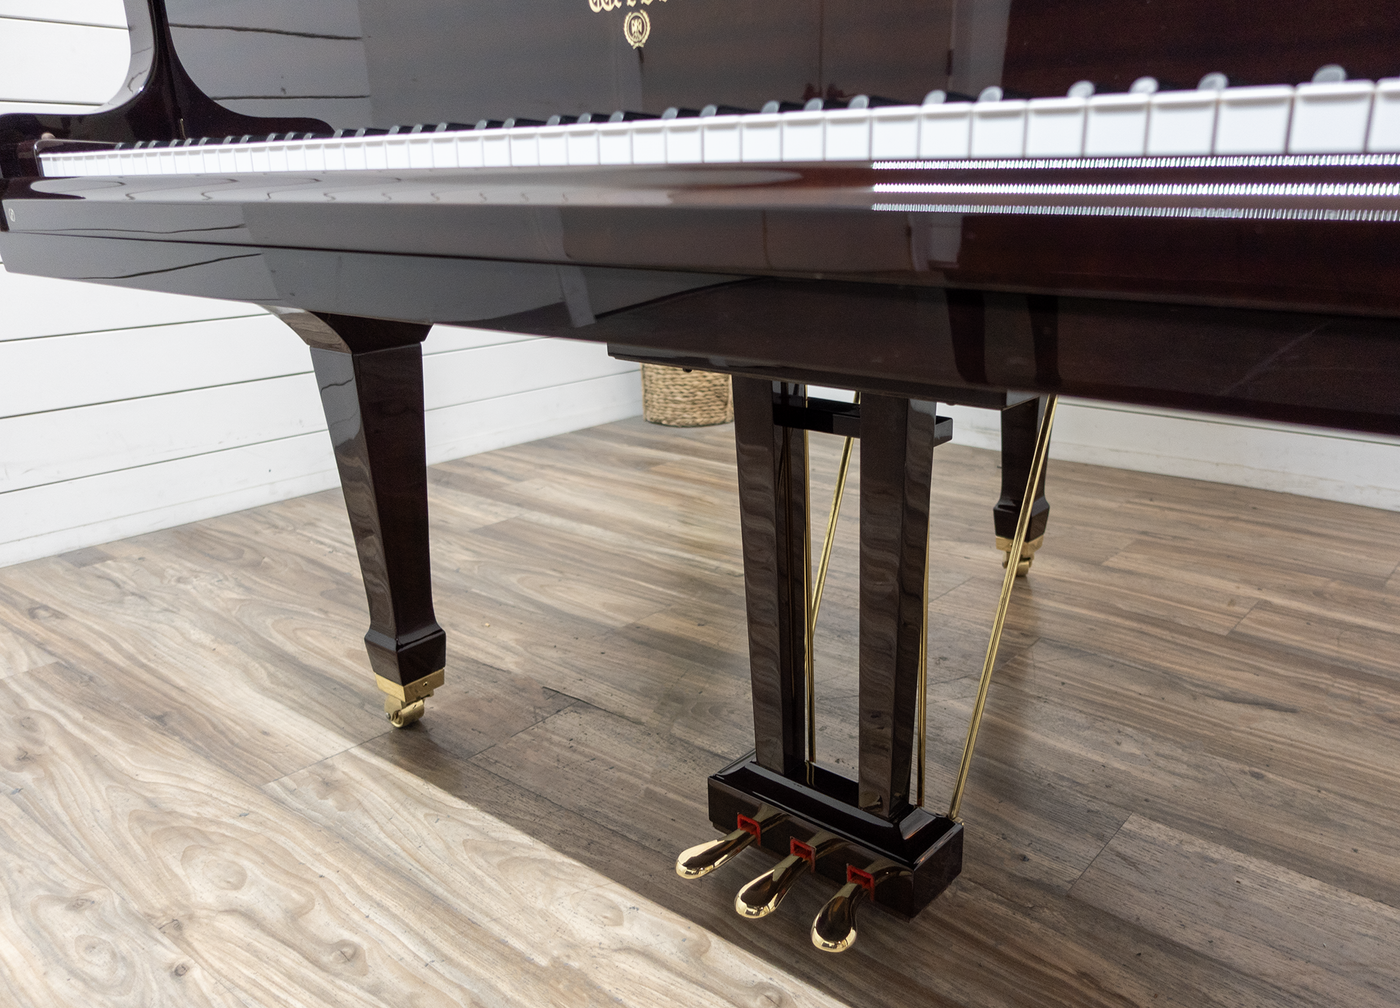 Weber WG-50 Baby Grand Piano